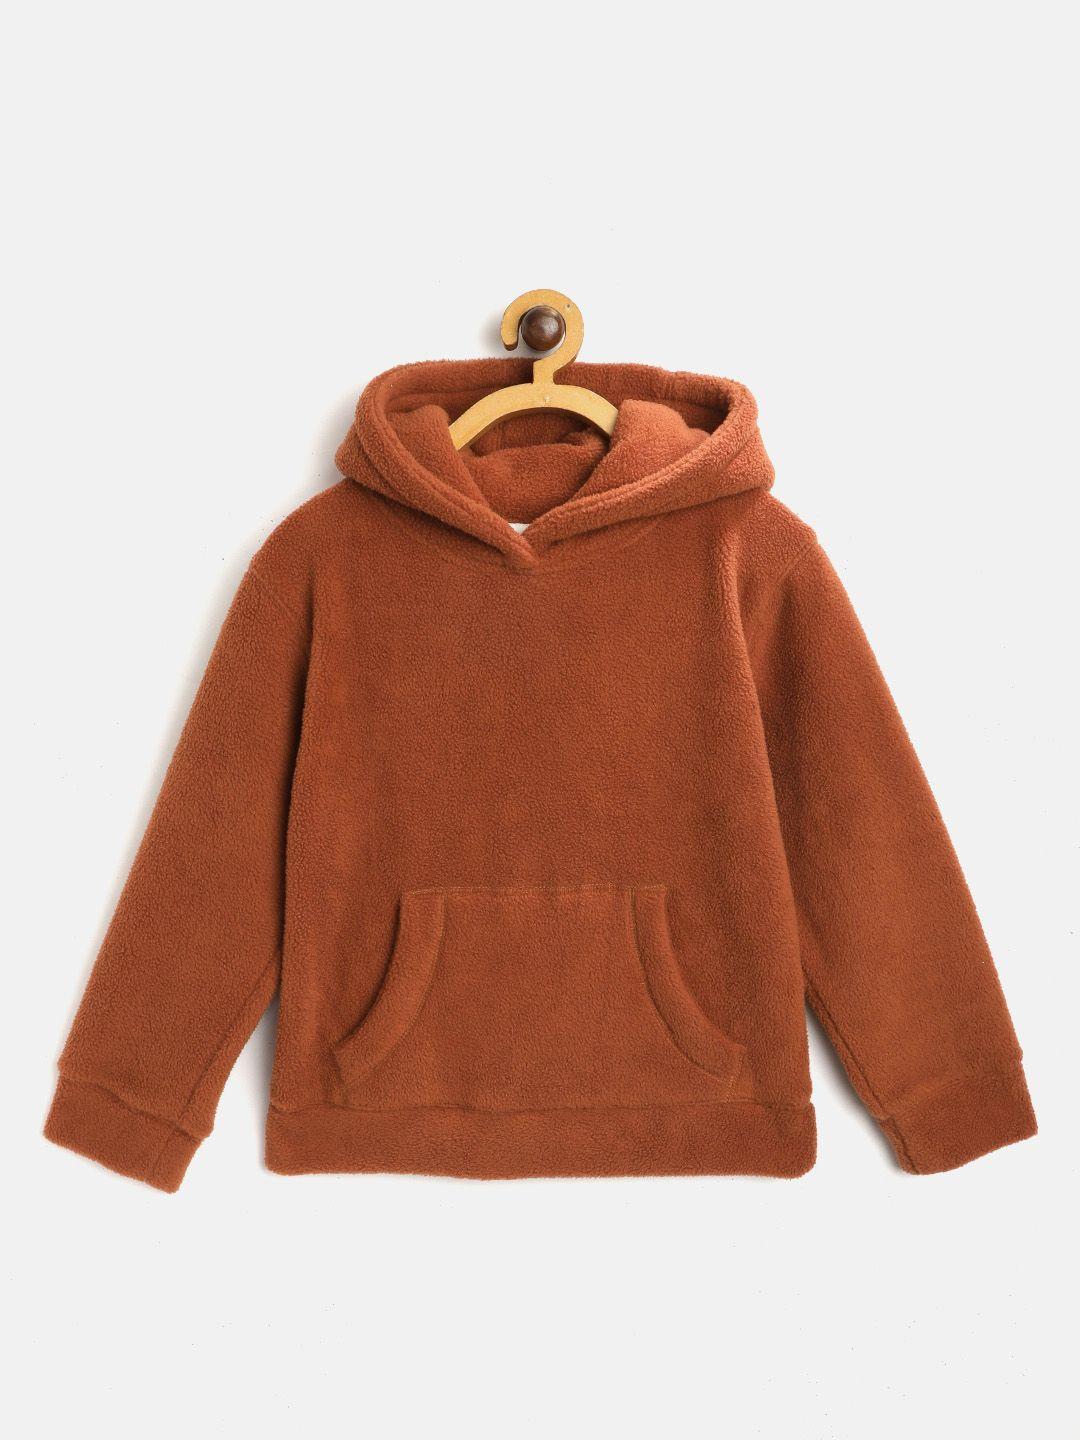 cherry crumble kids unisex brown solid hooded sweatshirt